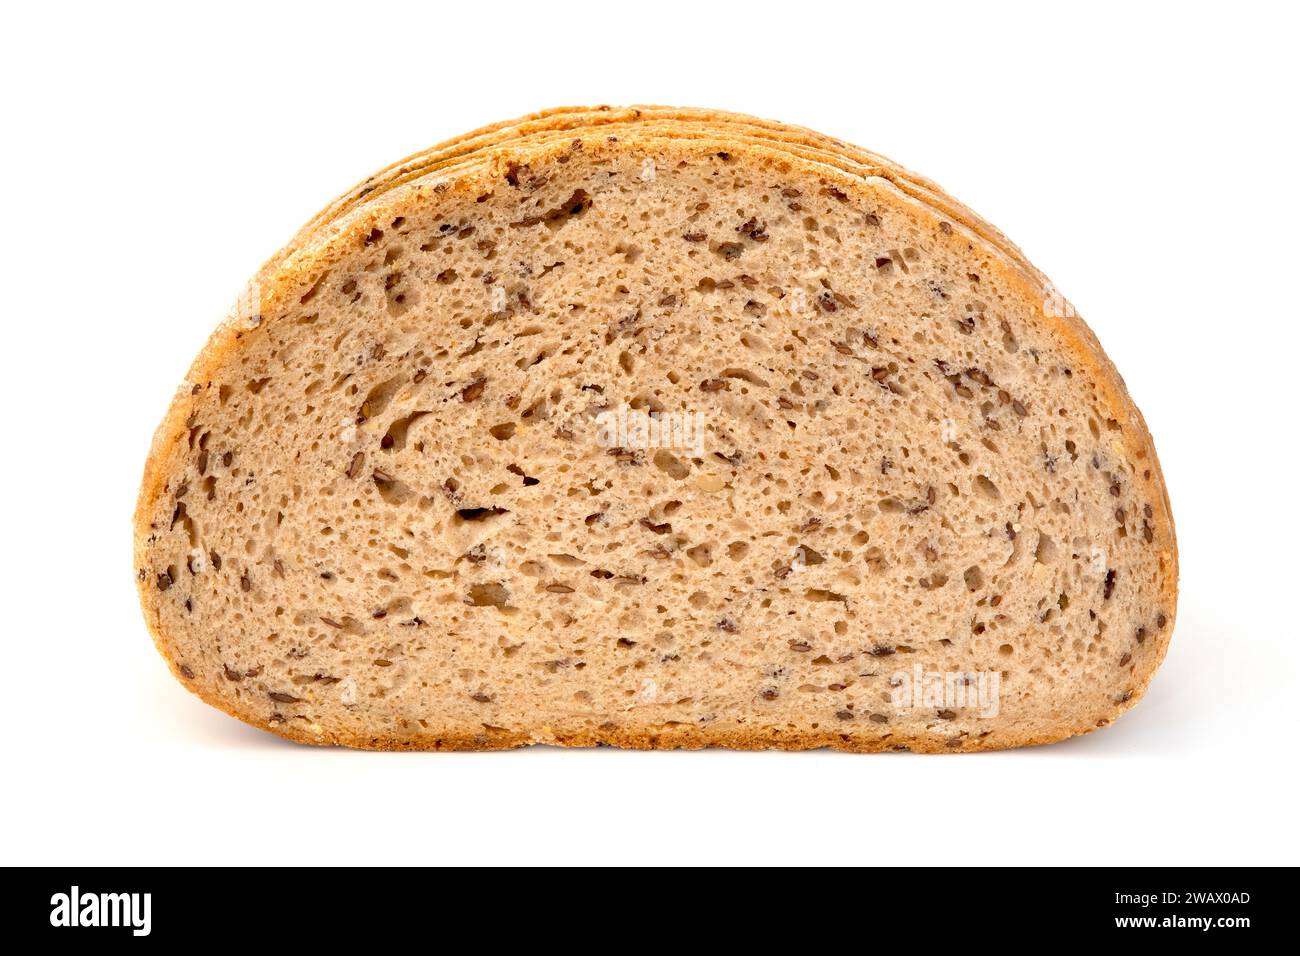 Multigrain bread on a white background Stock Photo